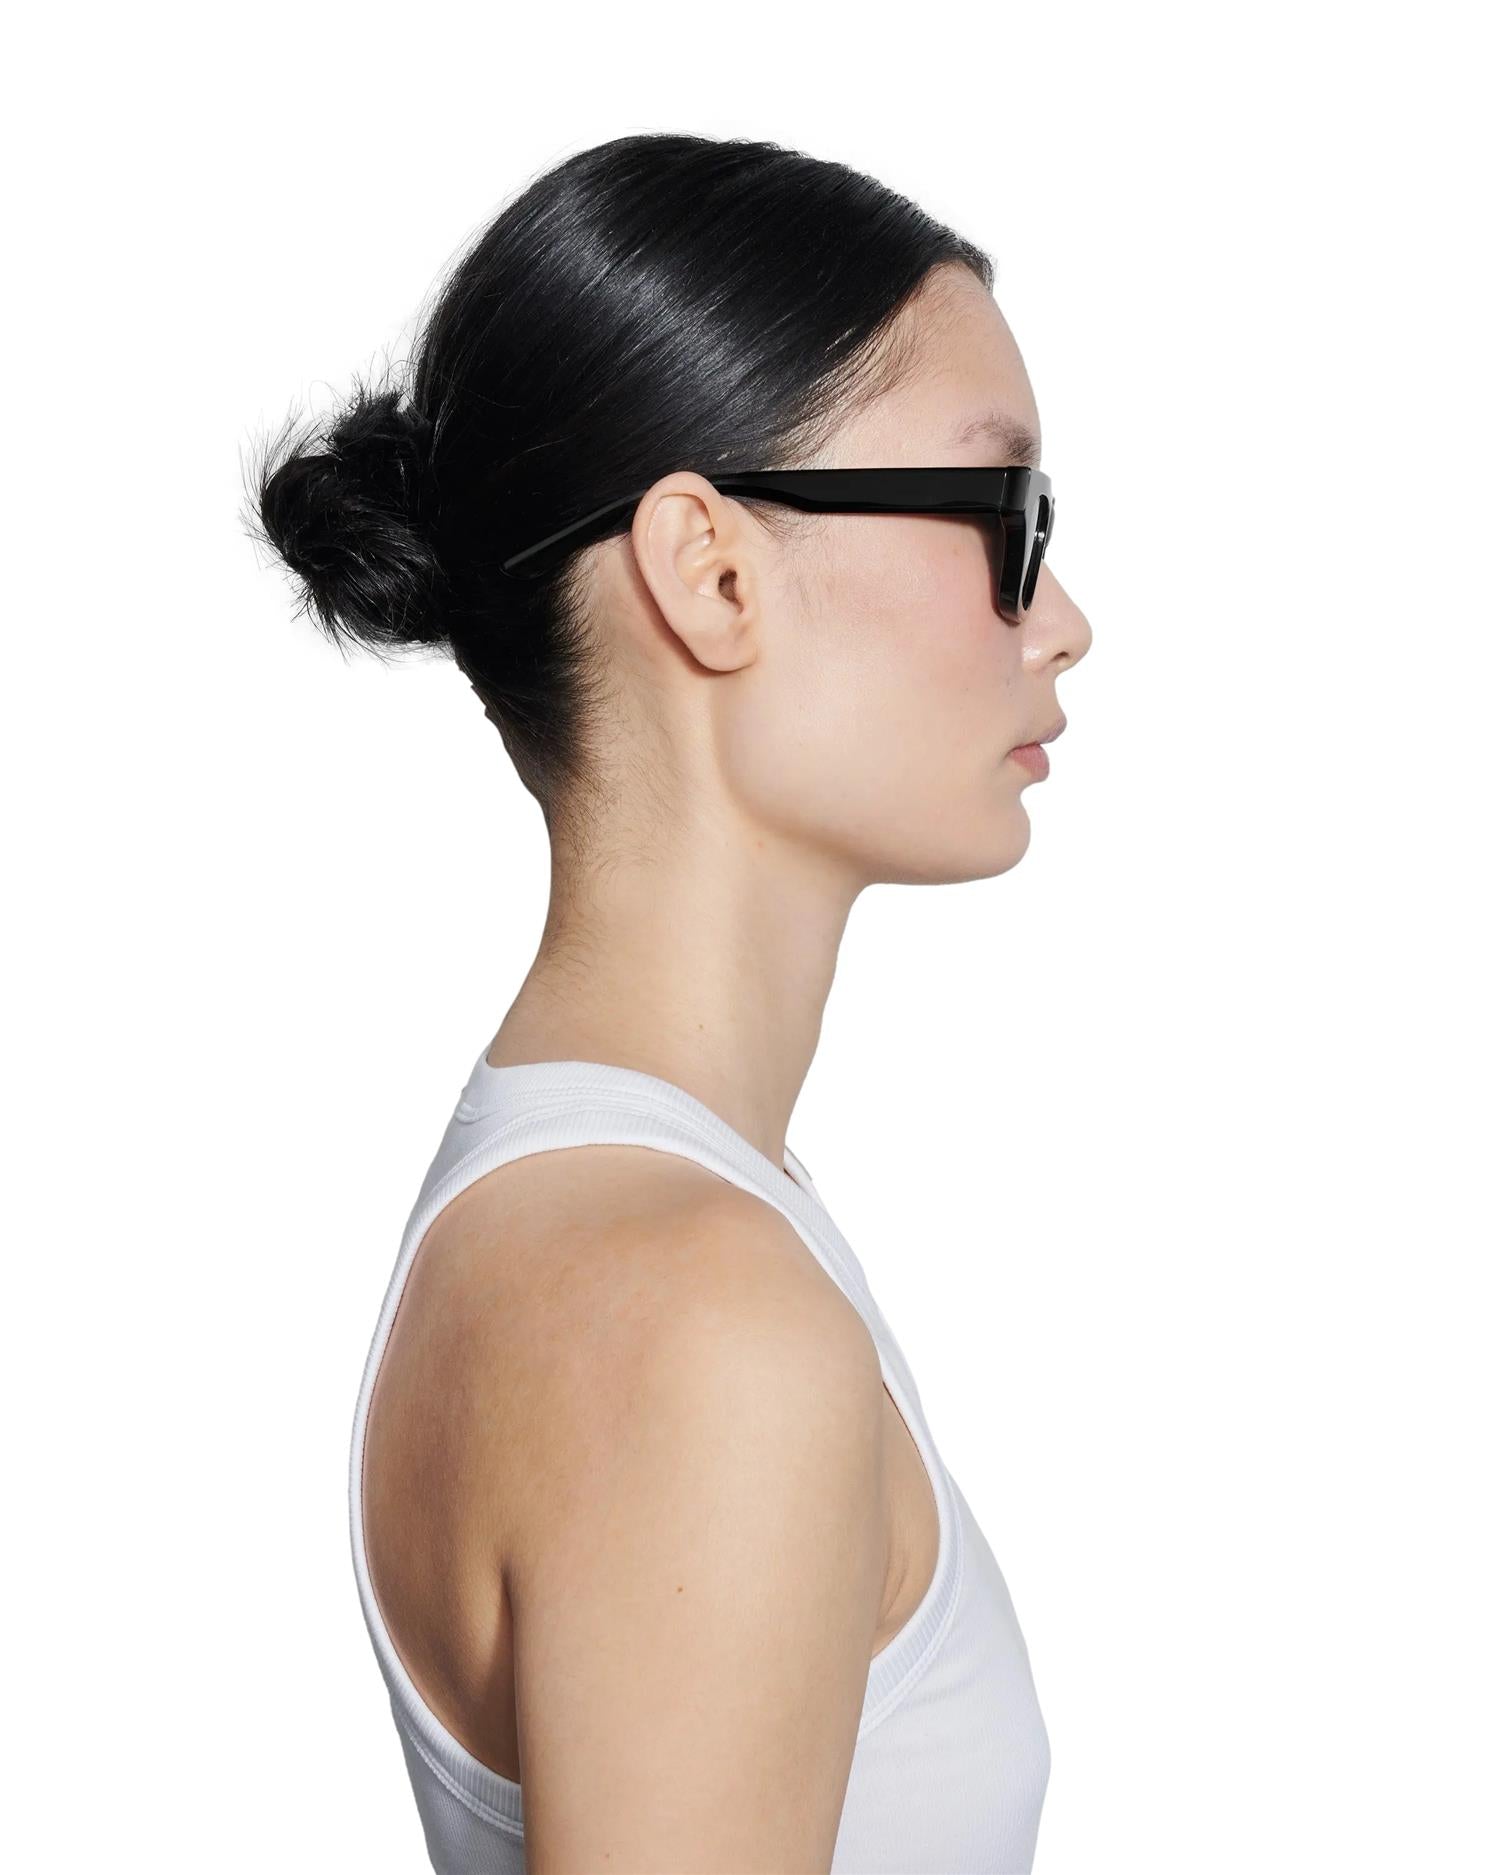 Chimi Eyewear 11 Black Solbriller Sort - modostore.no